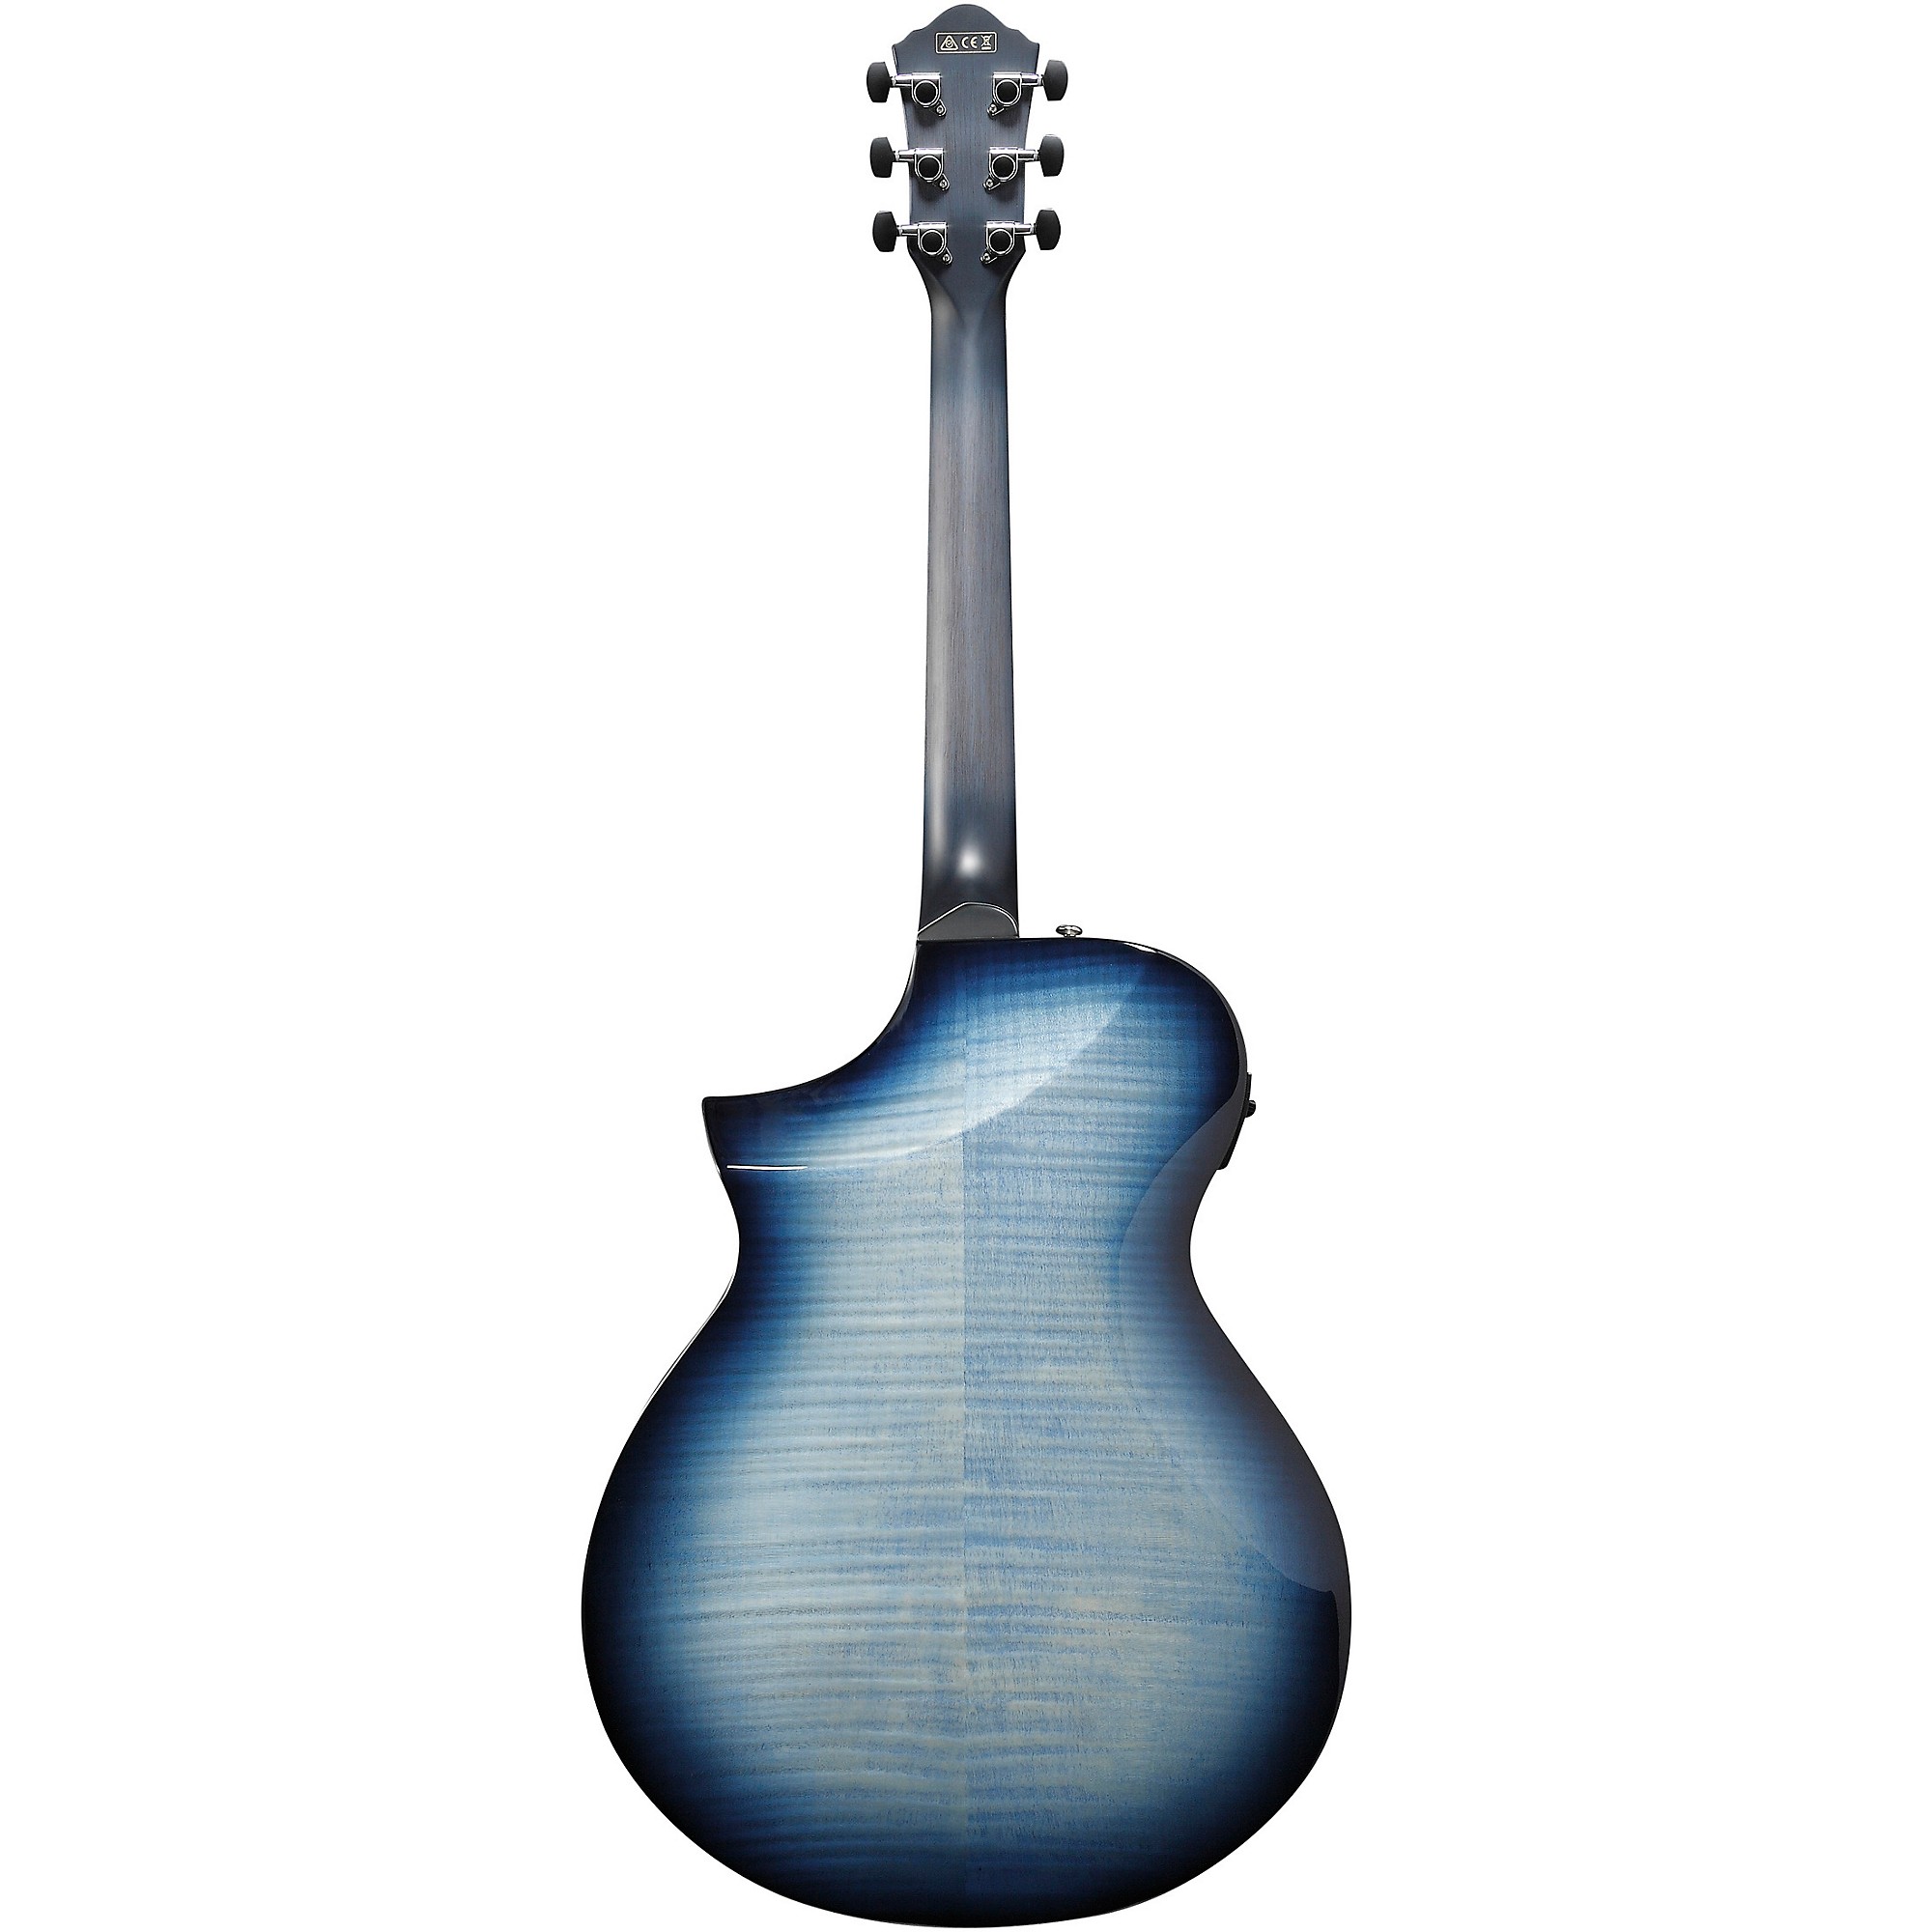 Акустически-электрическая гитара Ibanez AEWC400 Comfort Blue Sunburst